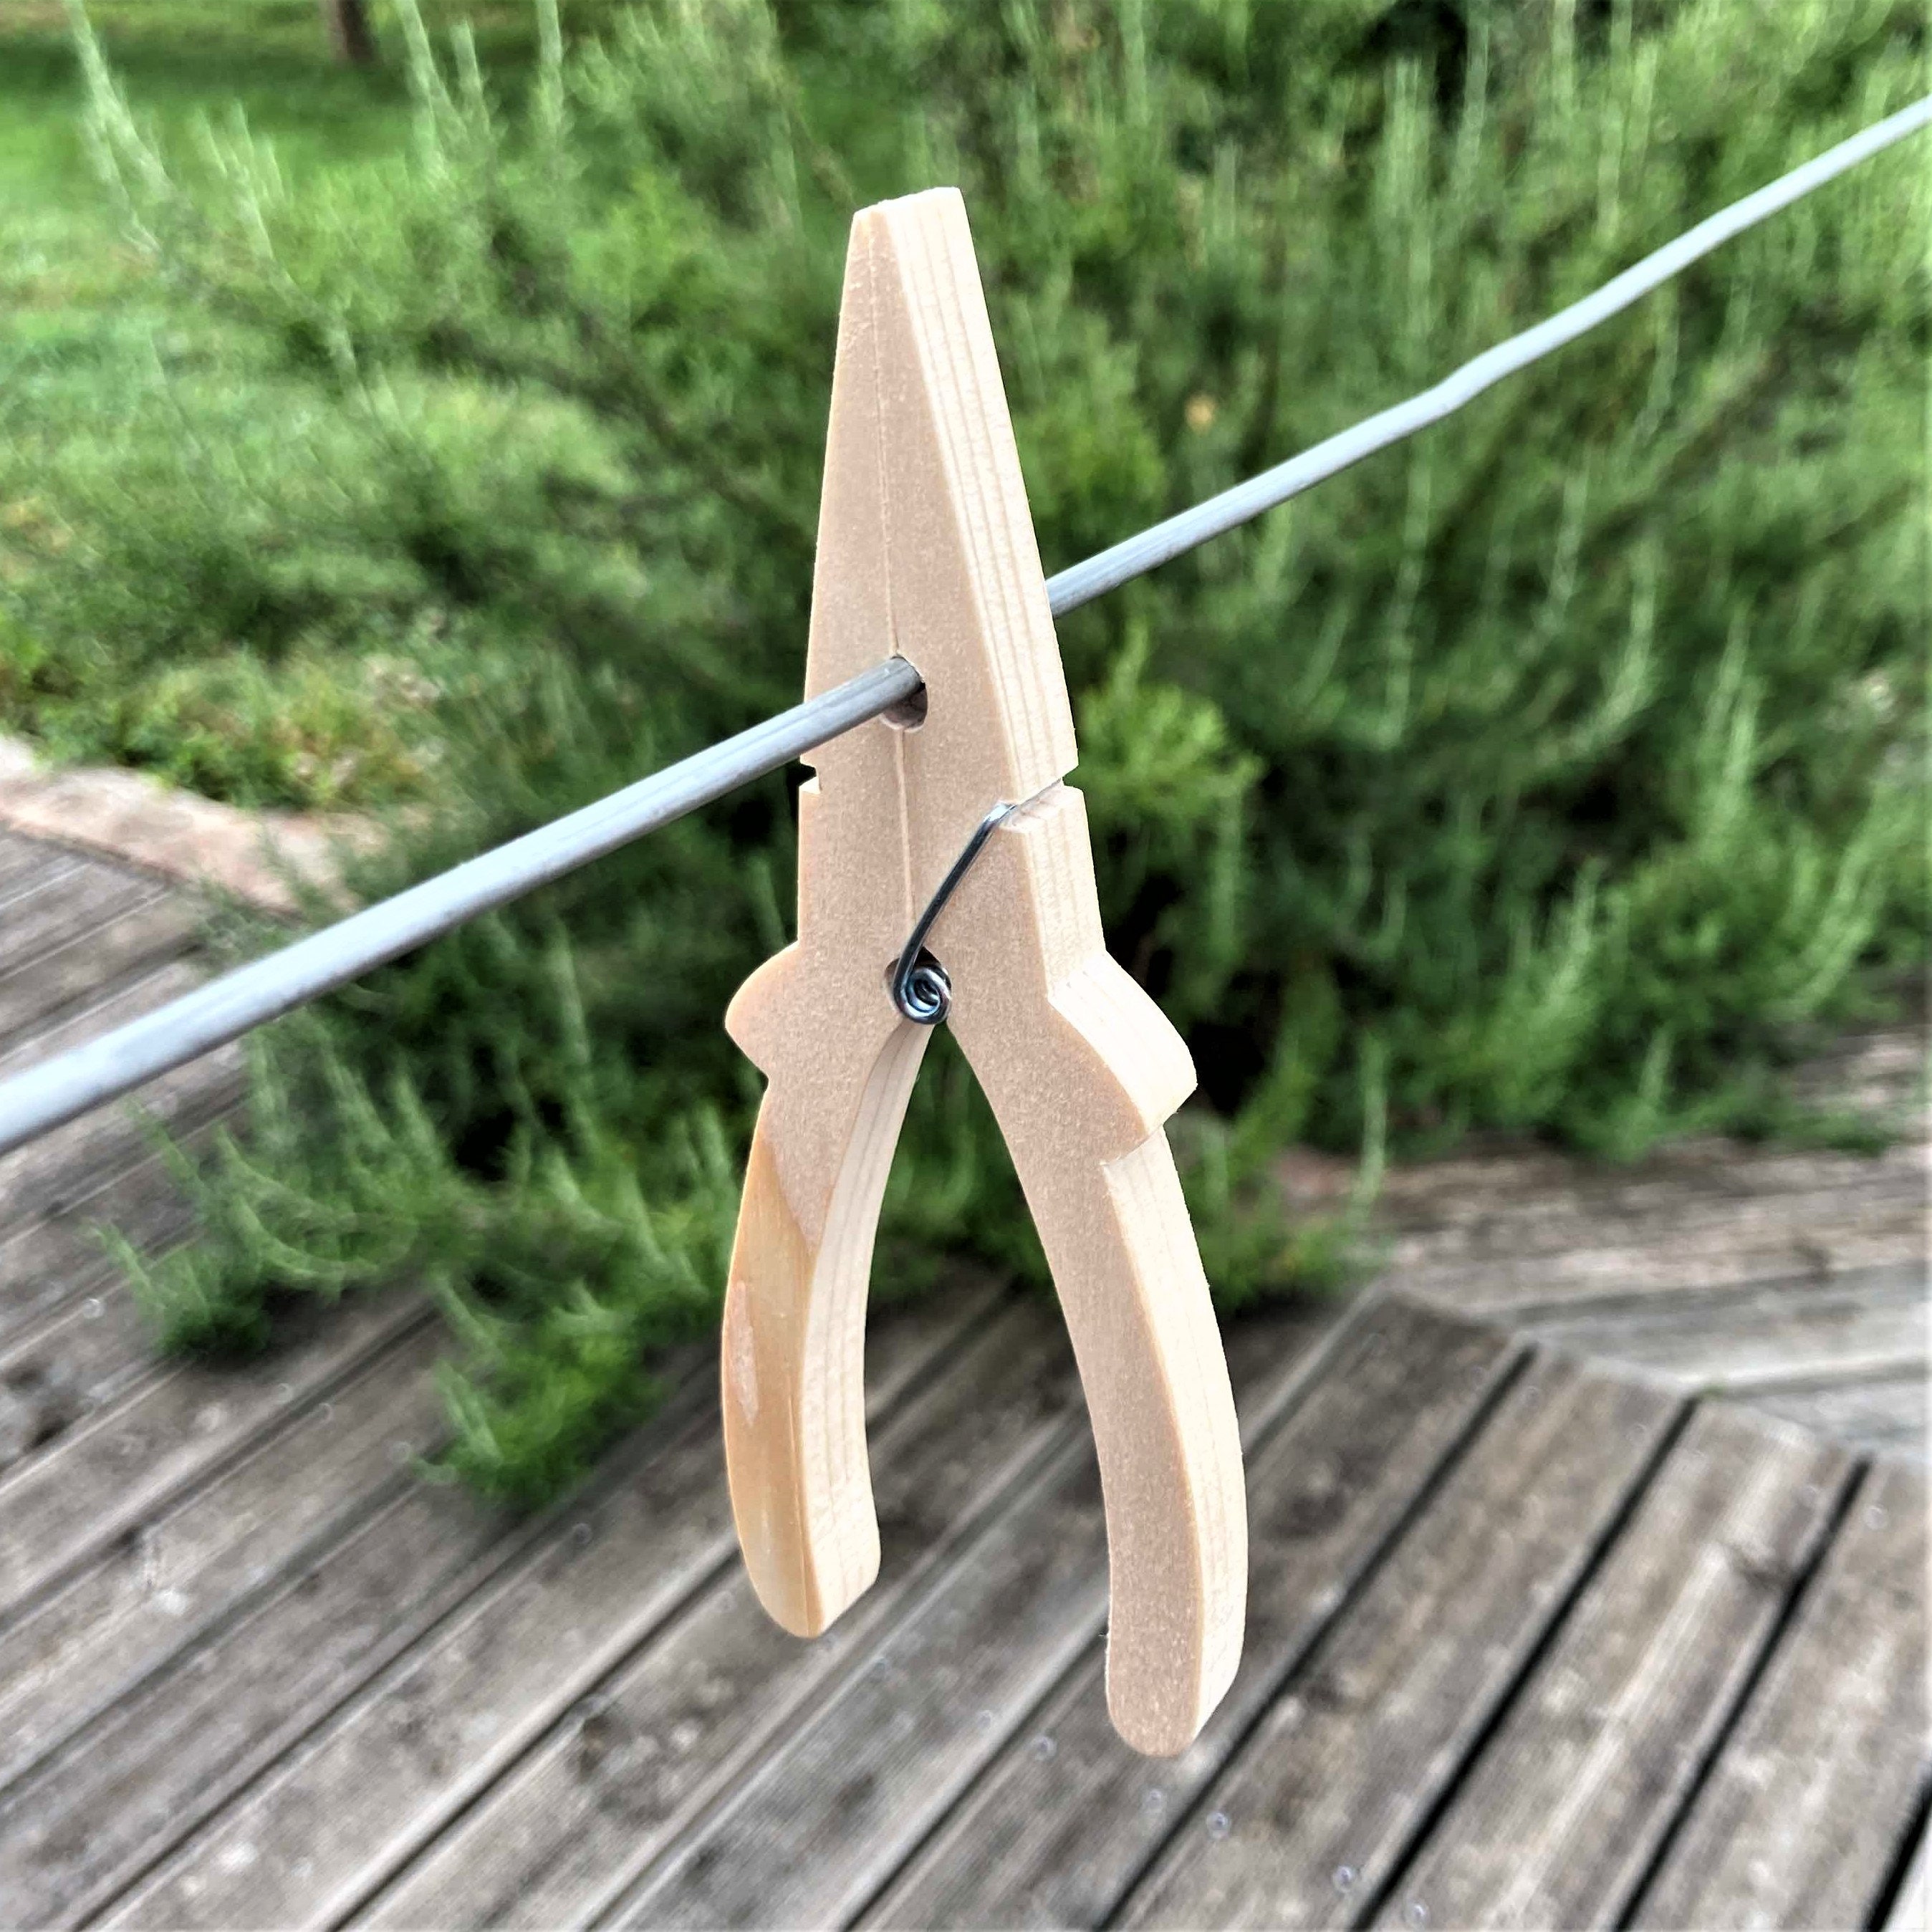 Mini Clothespins,small Clothespins Wood,clothespins Craft